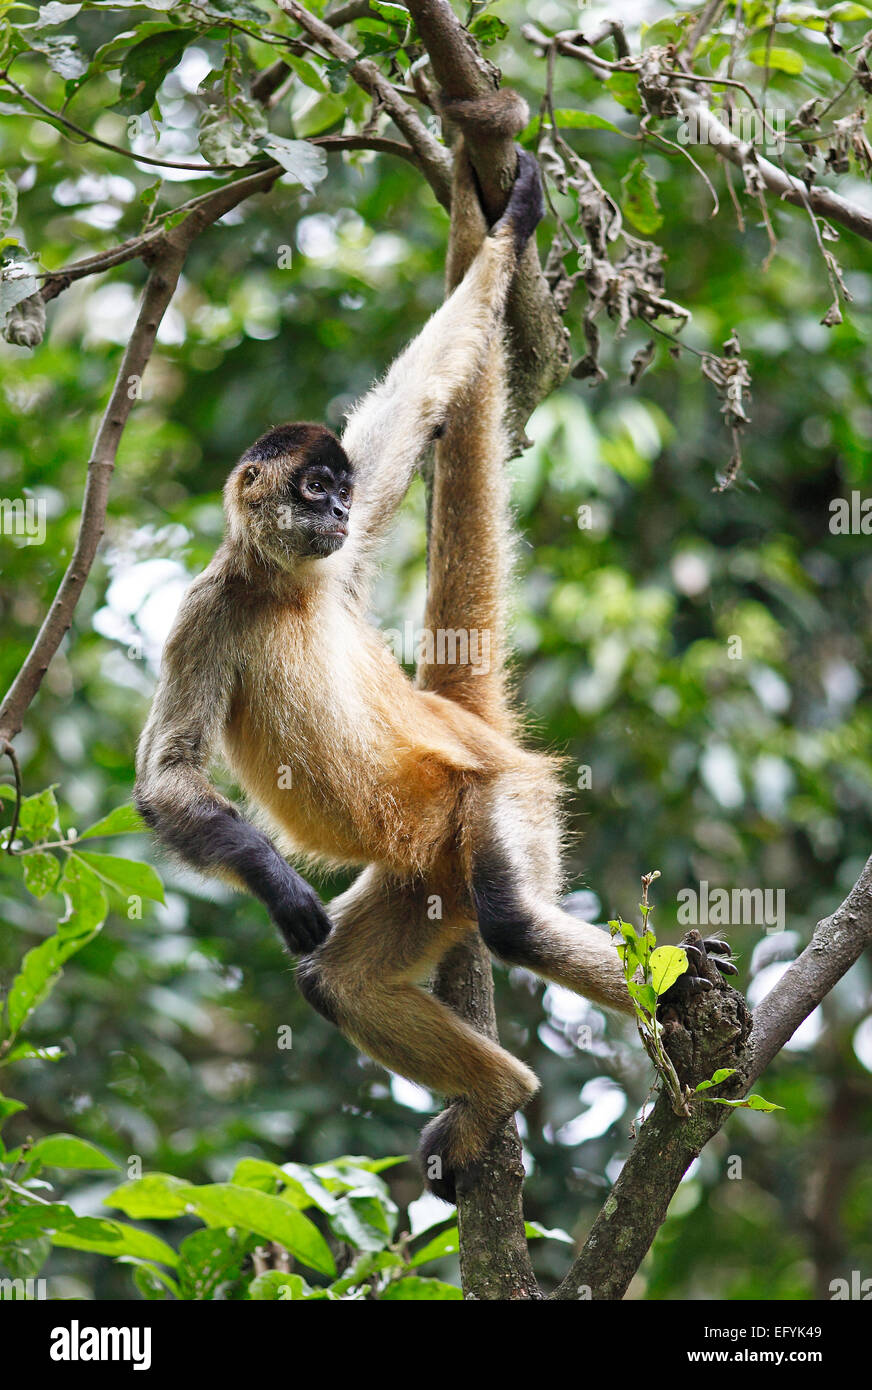 Centroamérica mono araña o Geoffroy's mono araña (Ateles geoffroyi), trepar a un árbol, provincia de Alajuela, Costa Rica Foto de stock